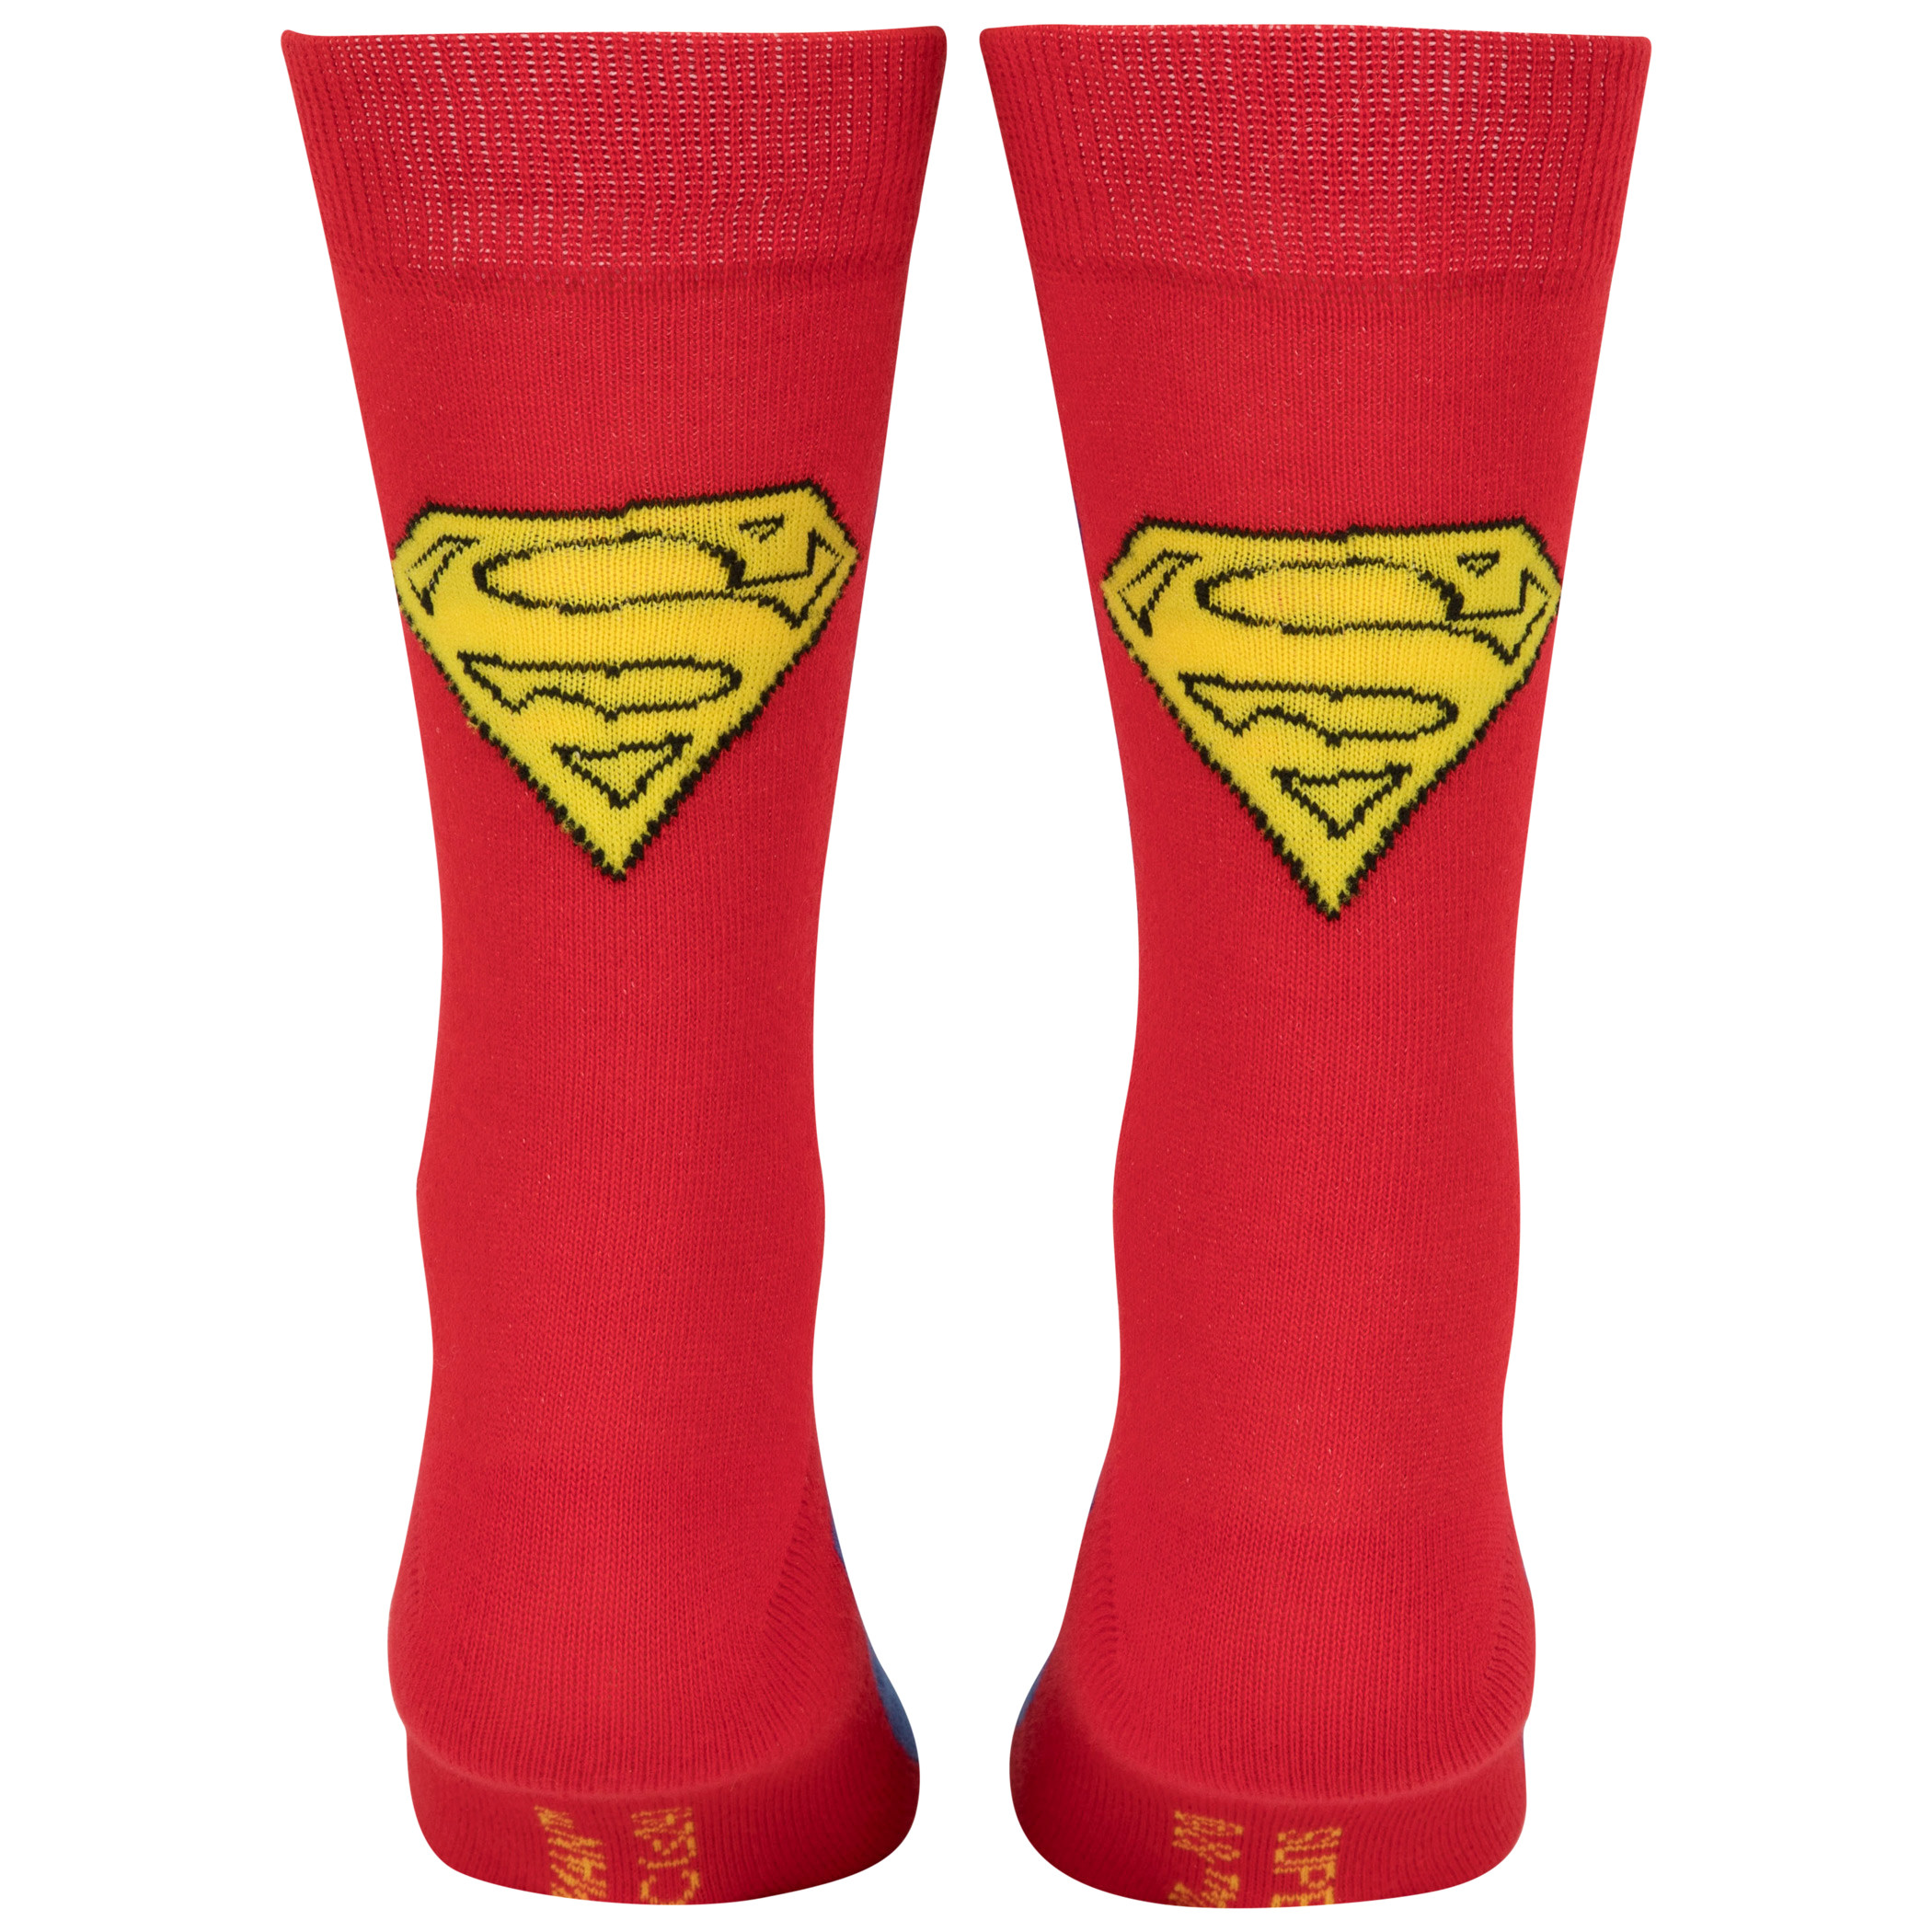 Superman Character Armor Crew Socks